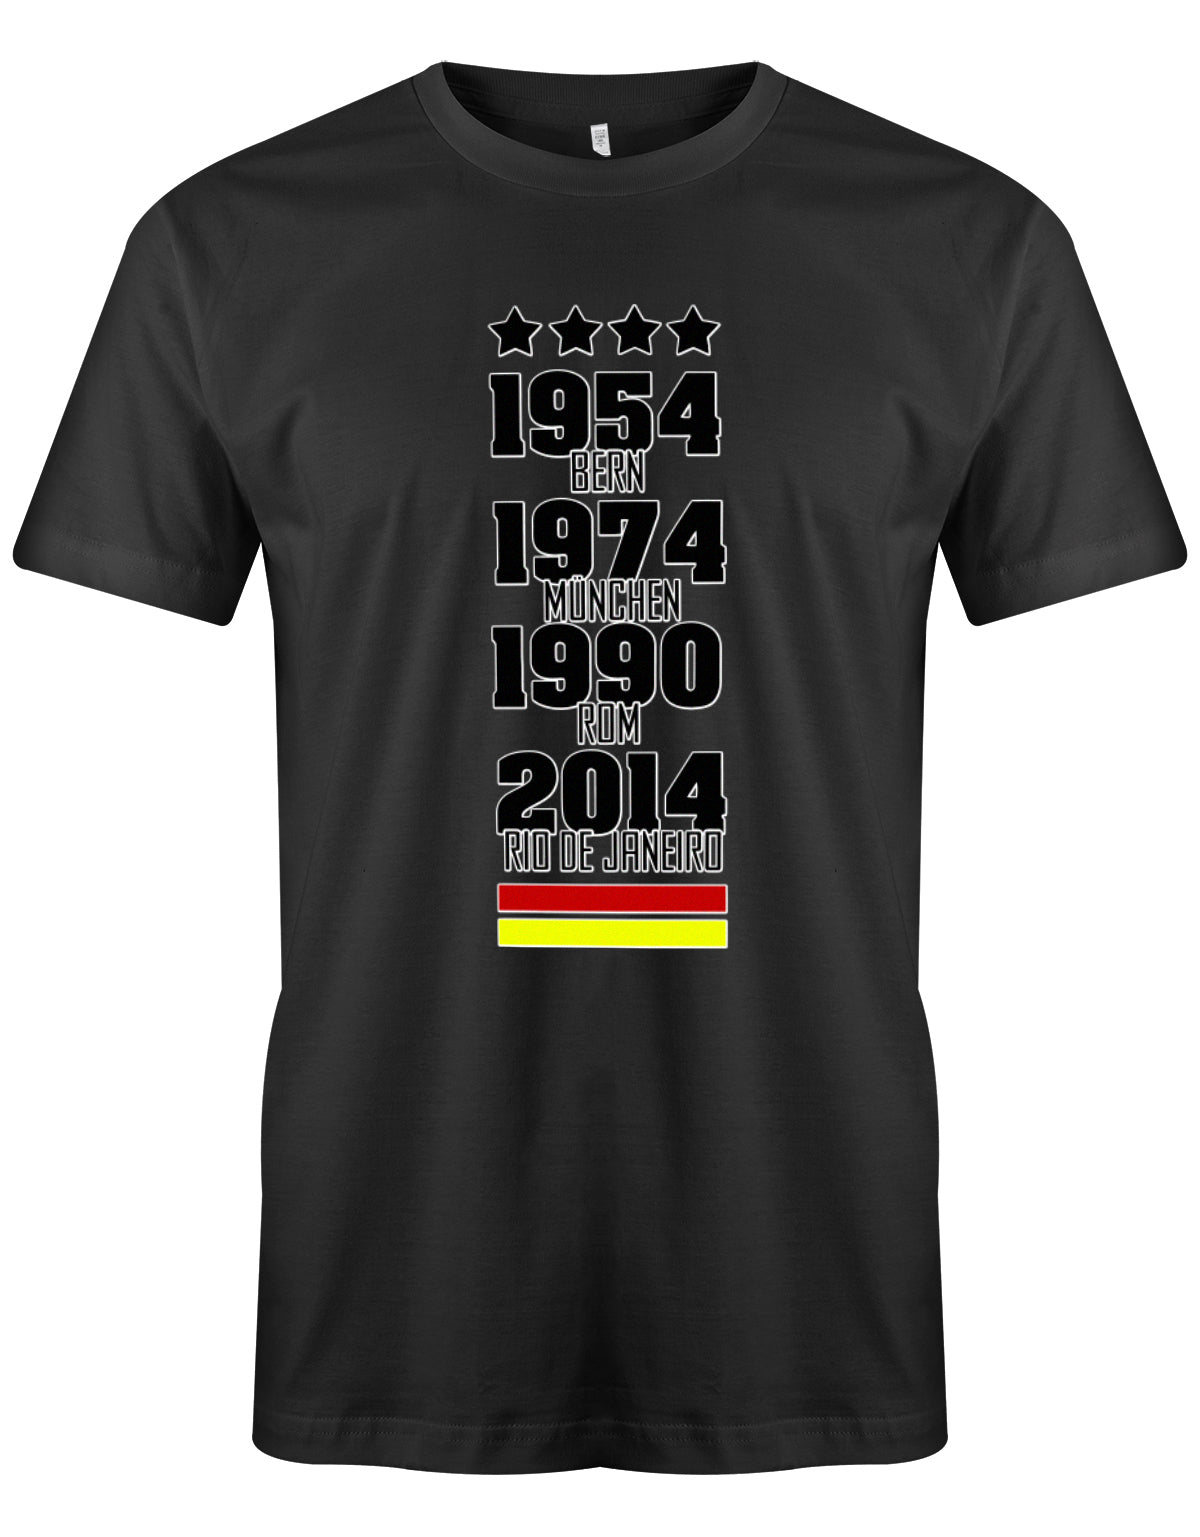 herren-shirt-schwarze8sRbEU3cnTdy